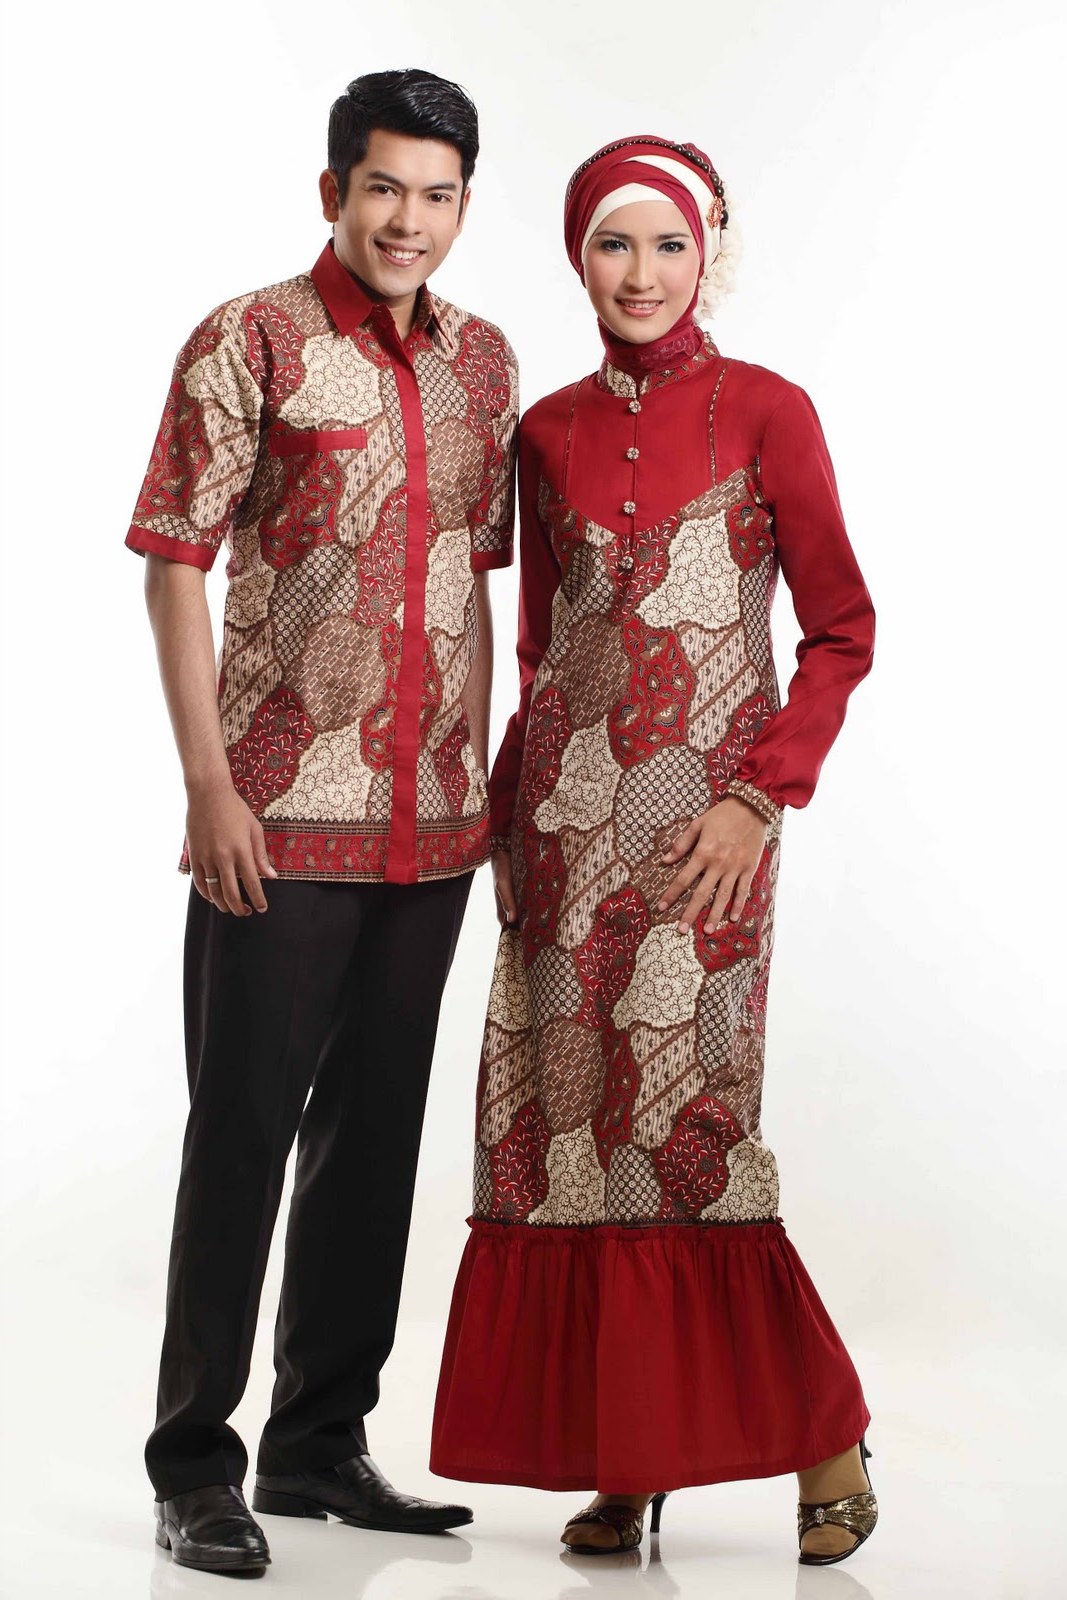 Ide Lihat Baju Lebaran Bqdd Bintang anda Trend Model Baju Batik Lebaran Terbaru 2013